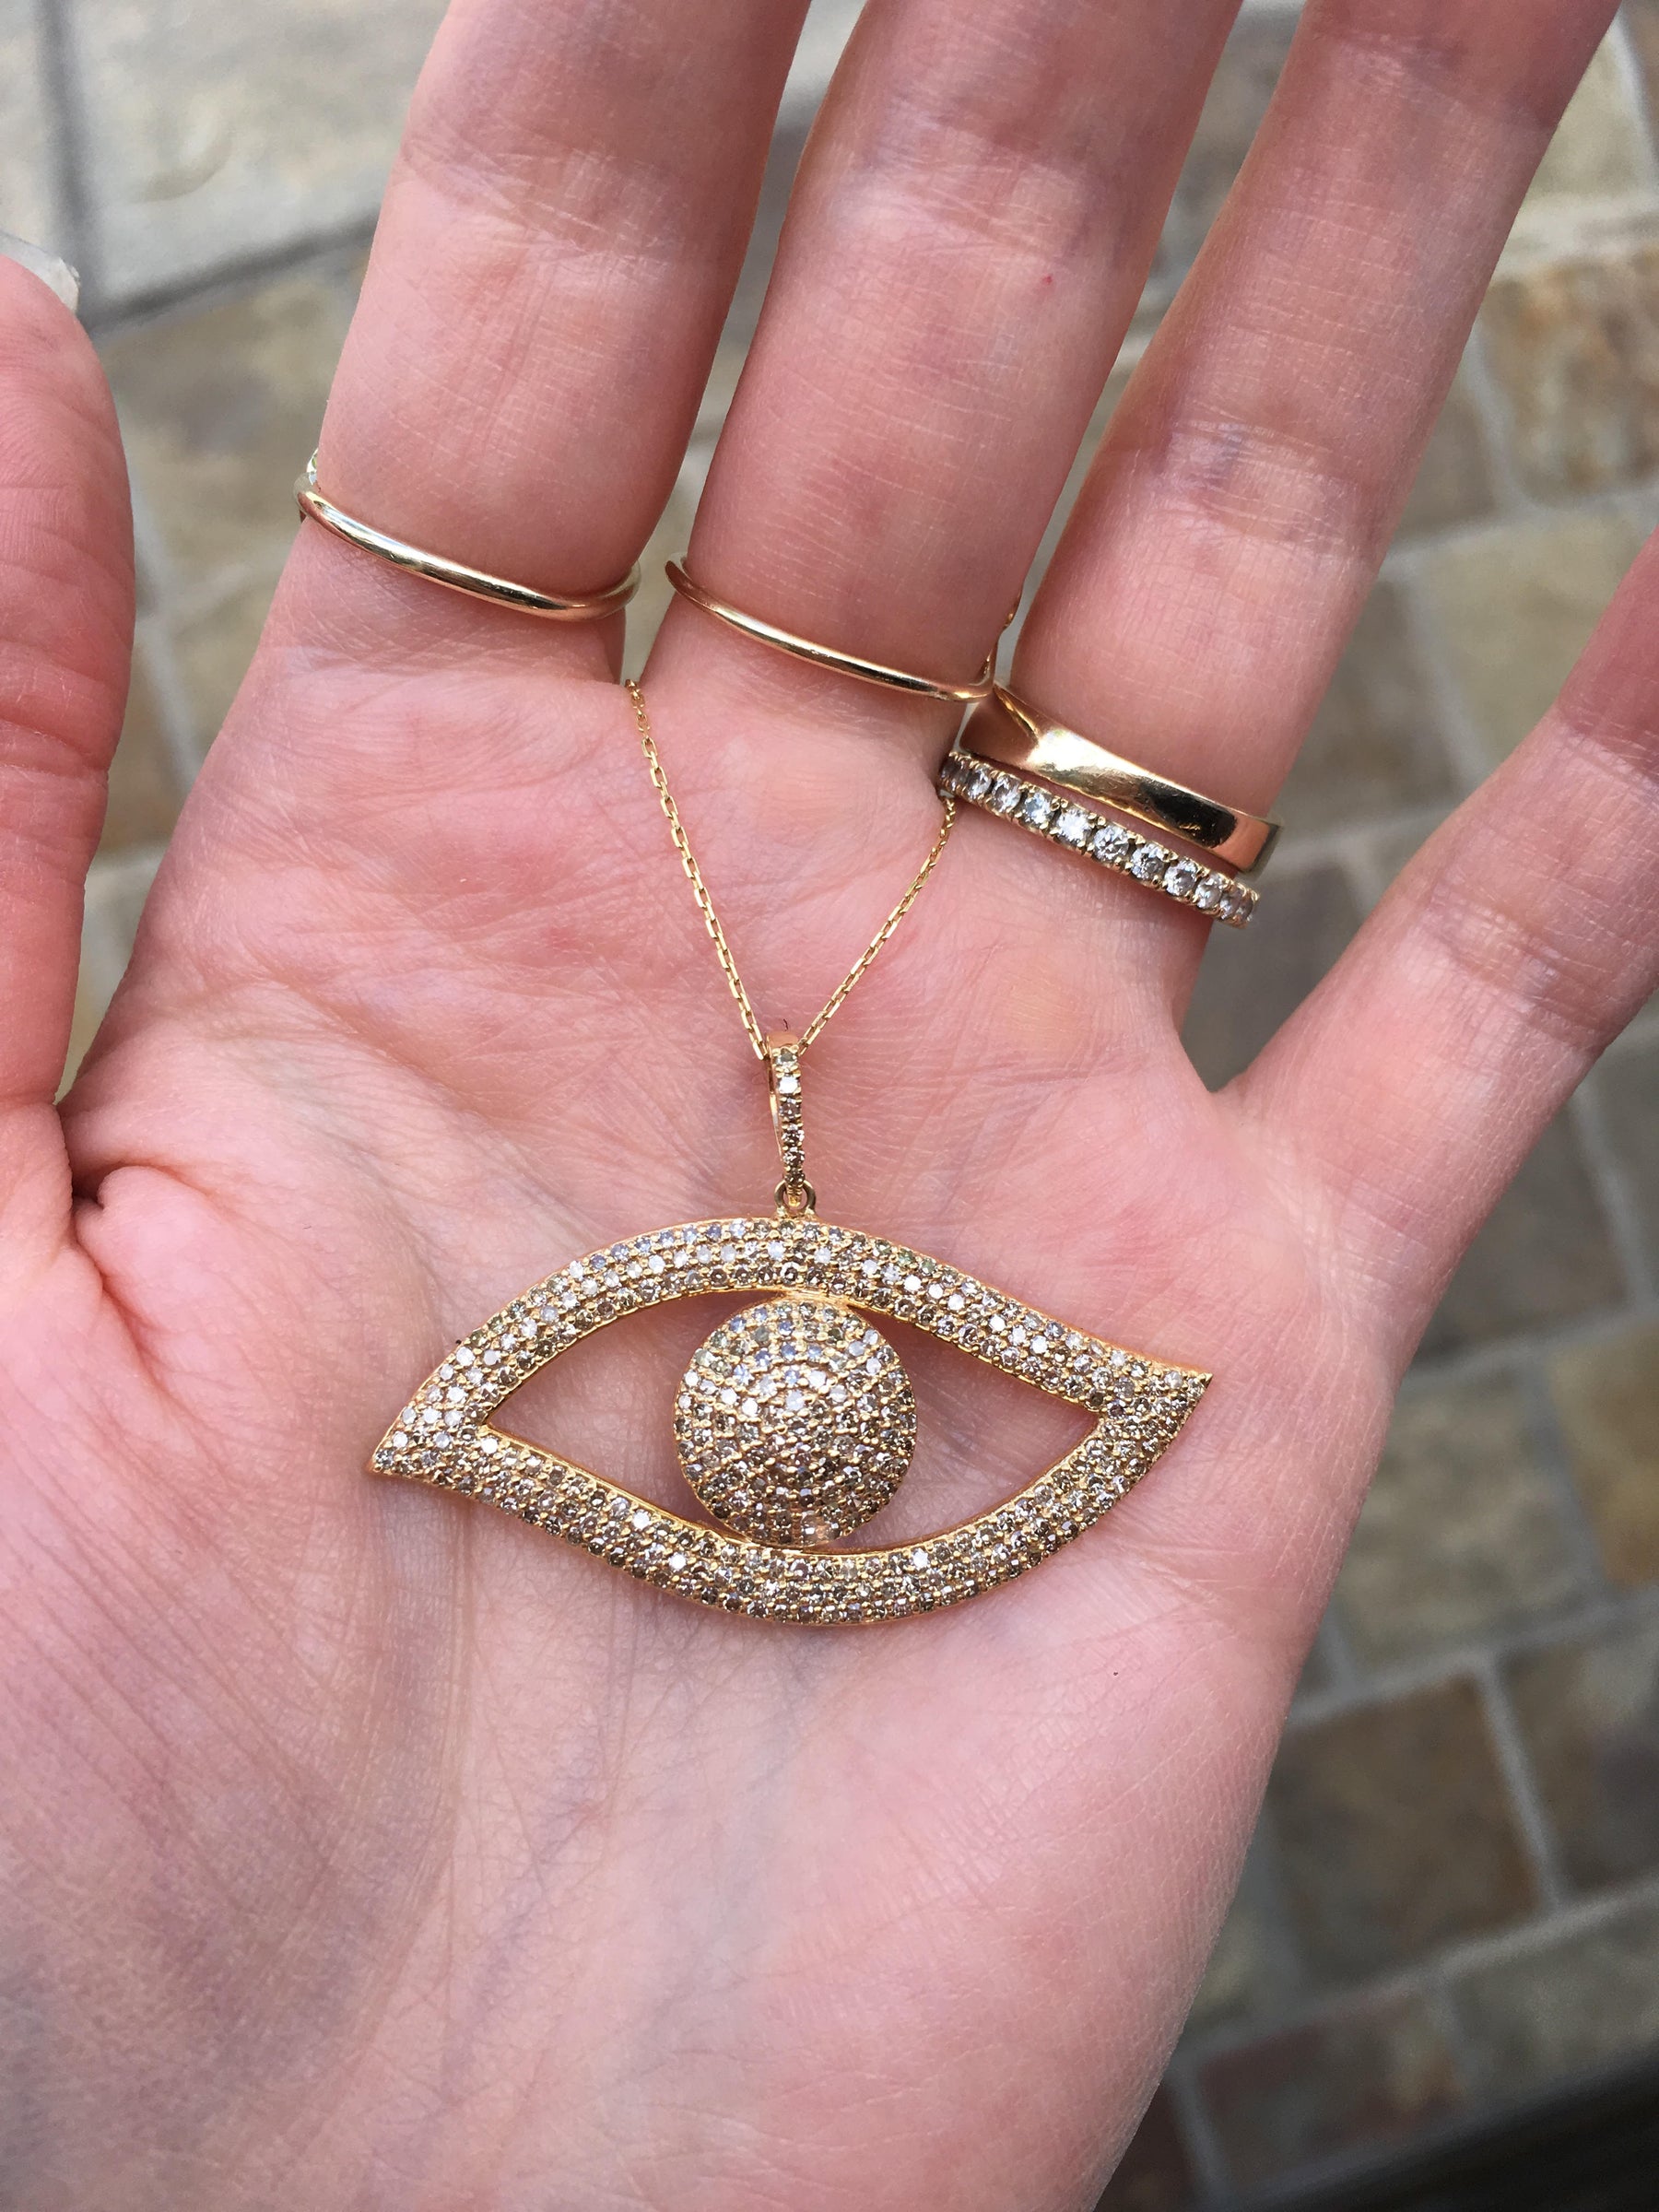 Evil Eye Necklace in Gold